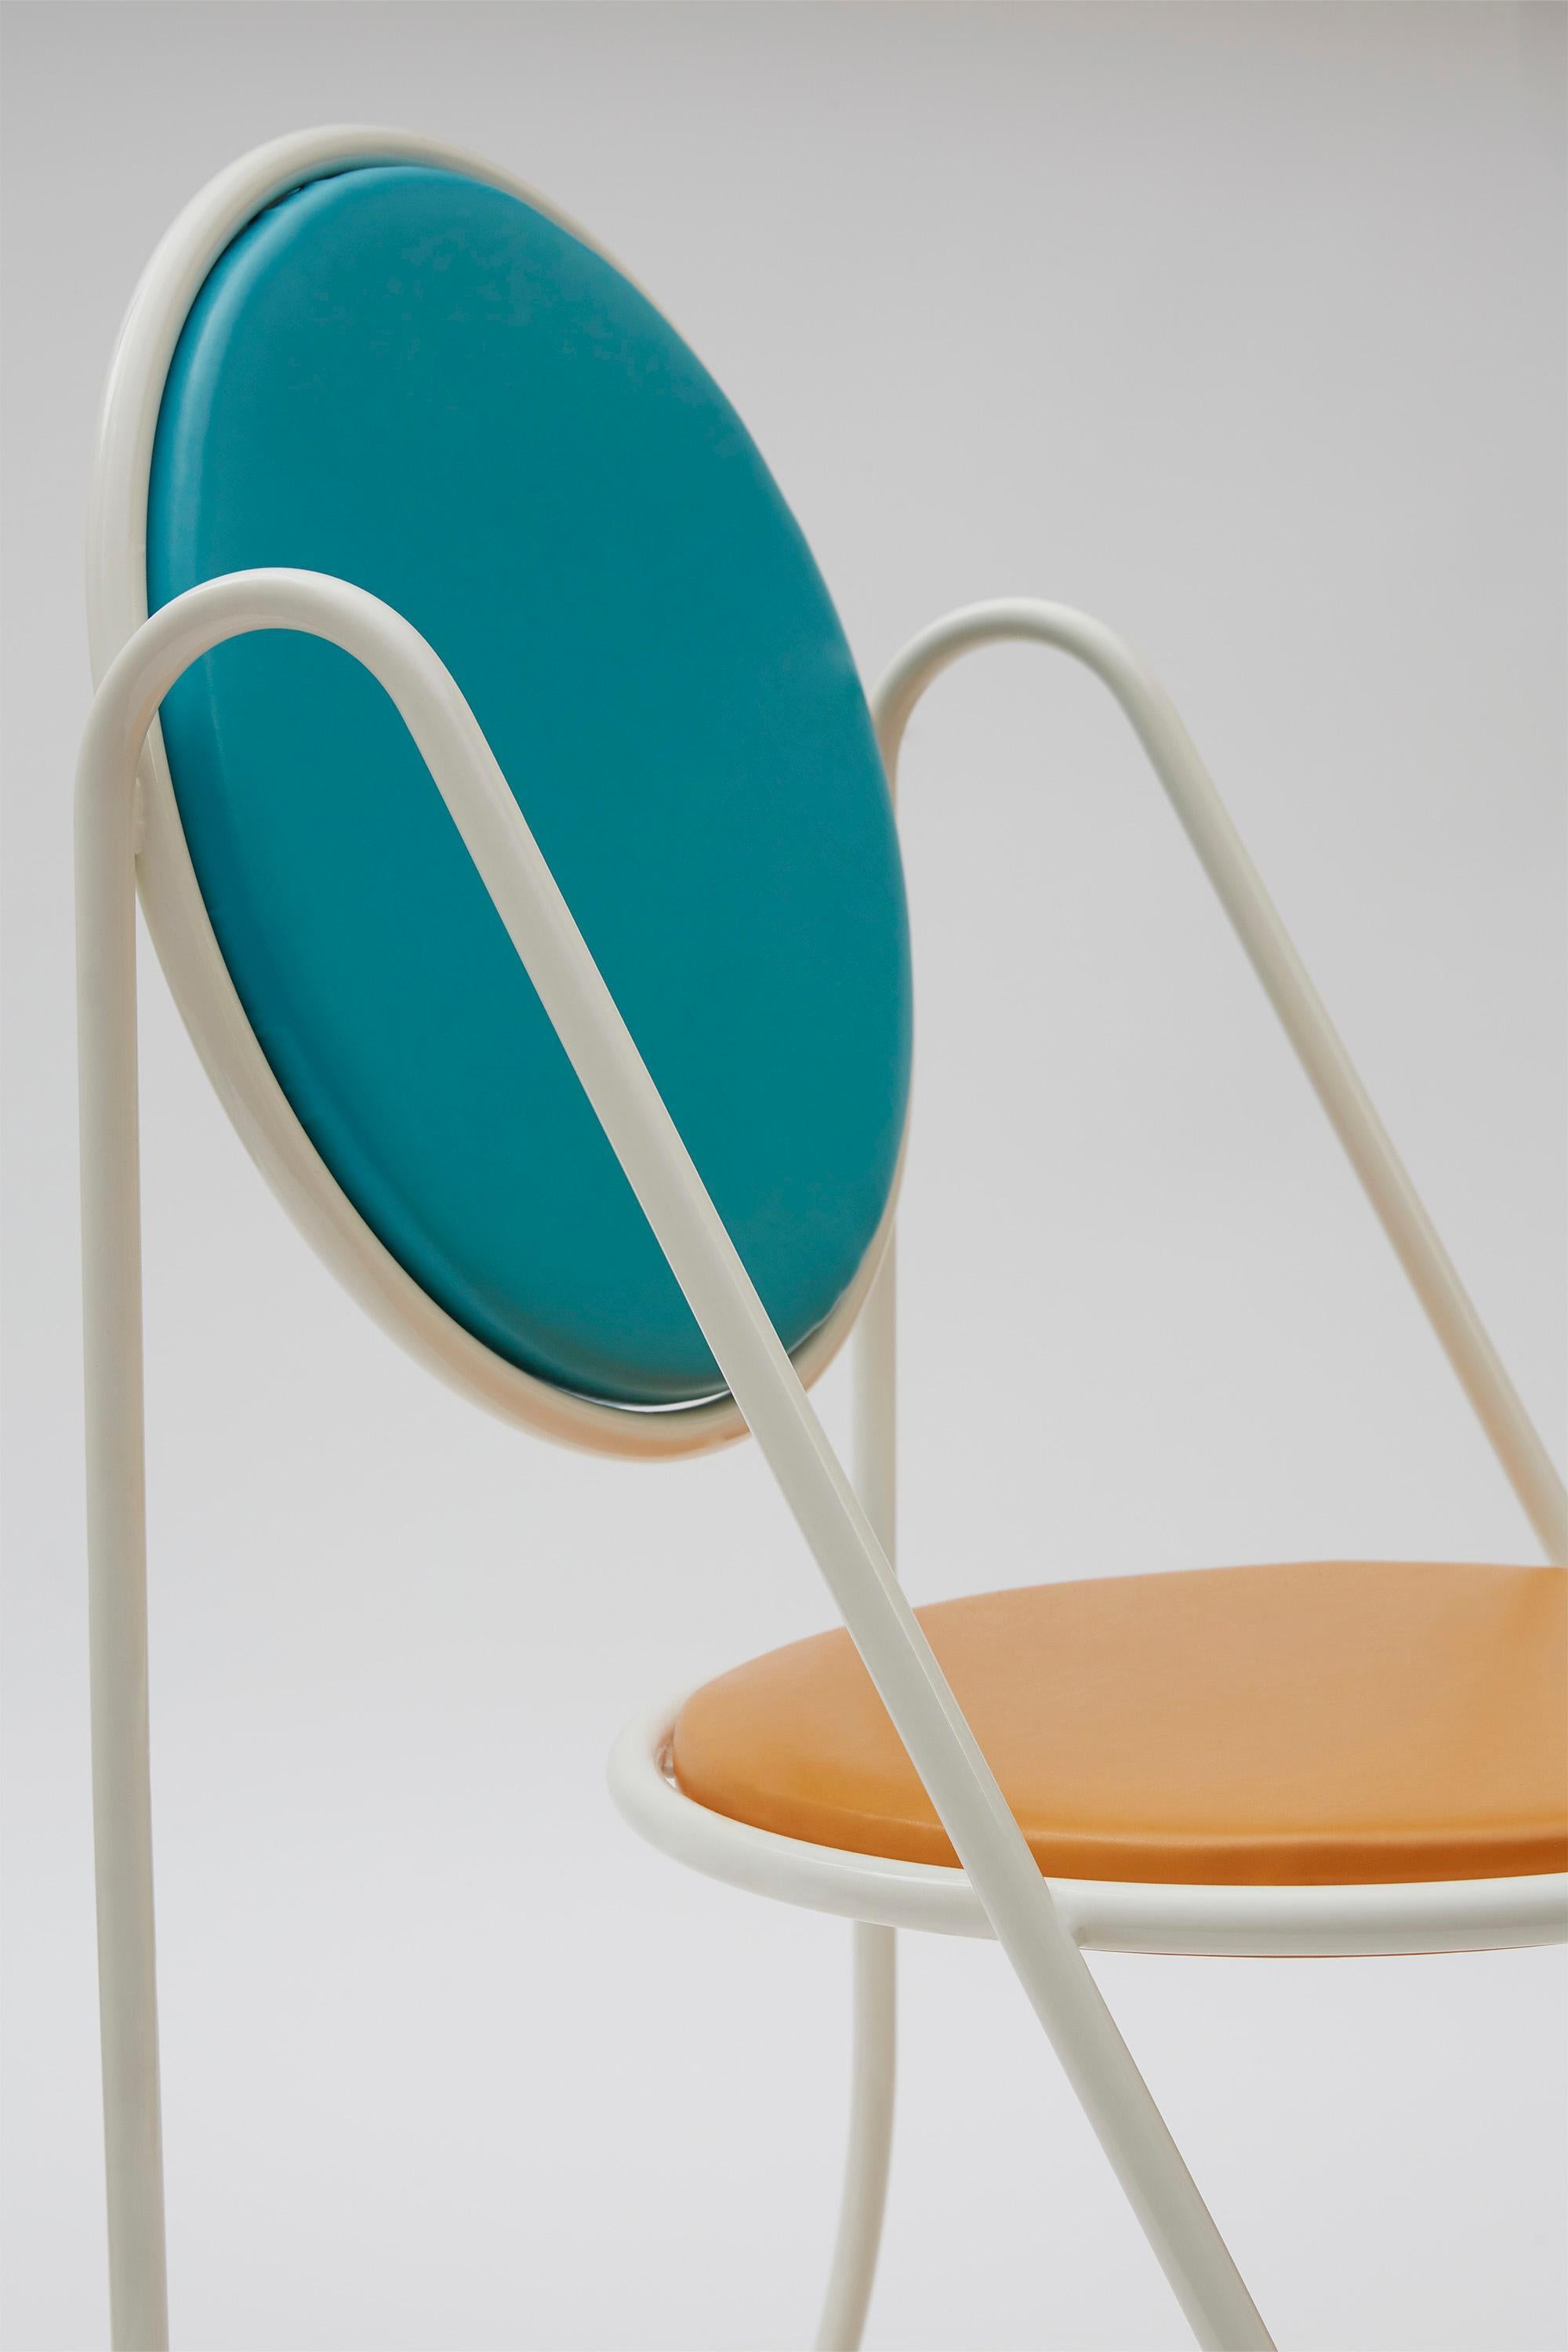 Powder-Coated U-Disk Chair, White, Light-Blue & Orange For Sale